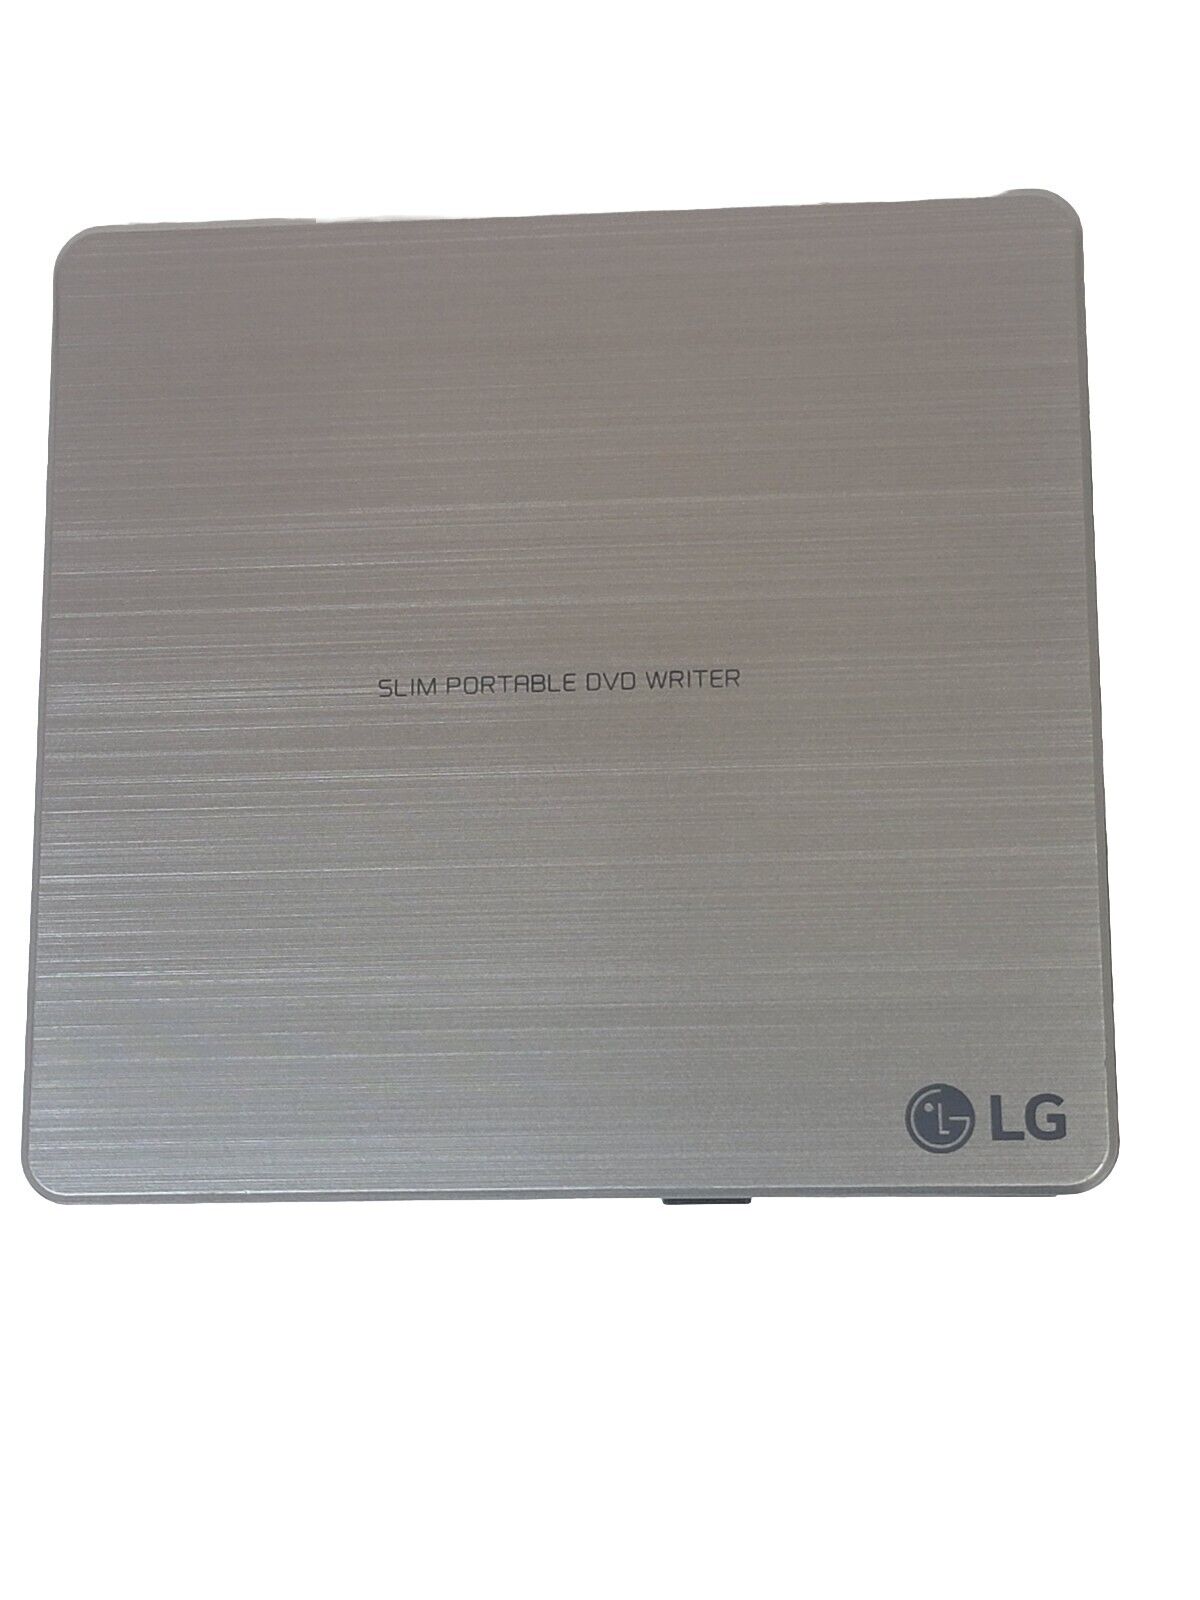 LG GP60NS50 DVDRW External Slim Driver Writer